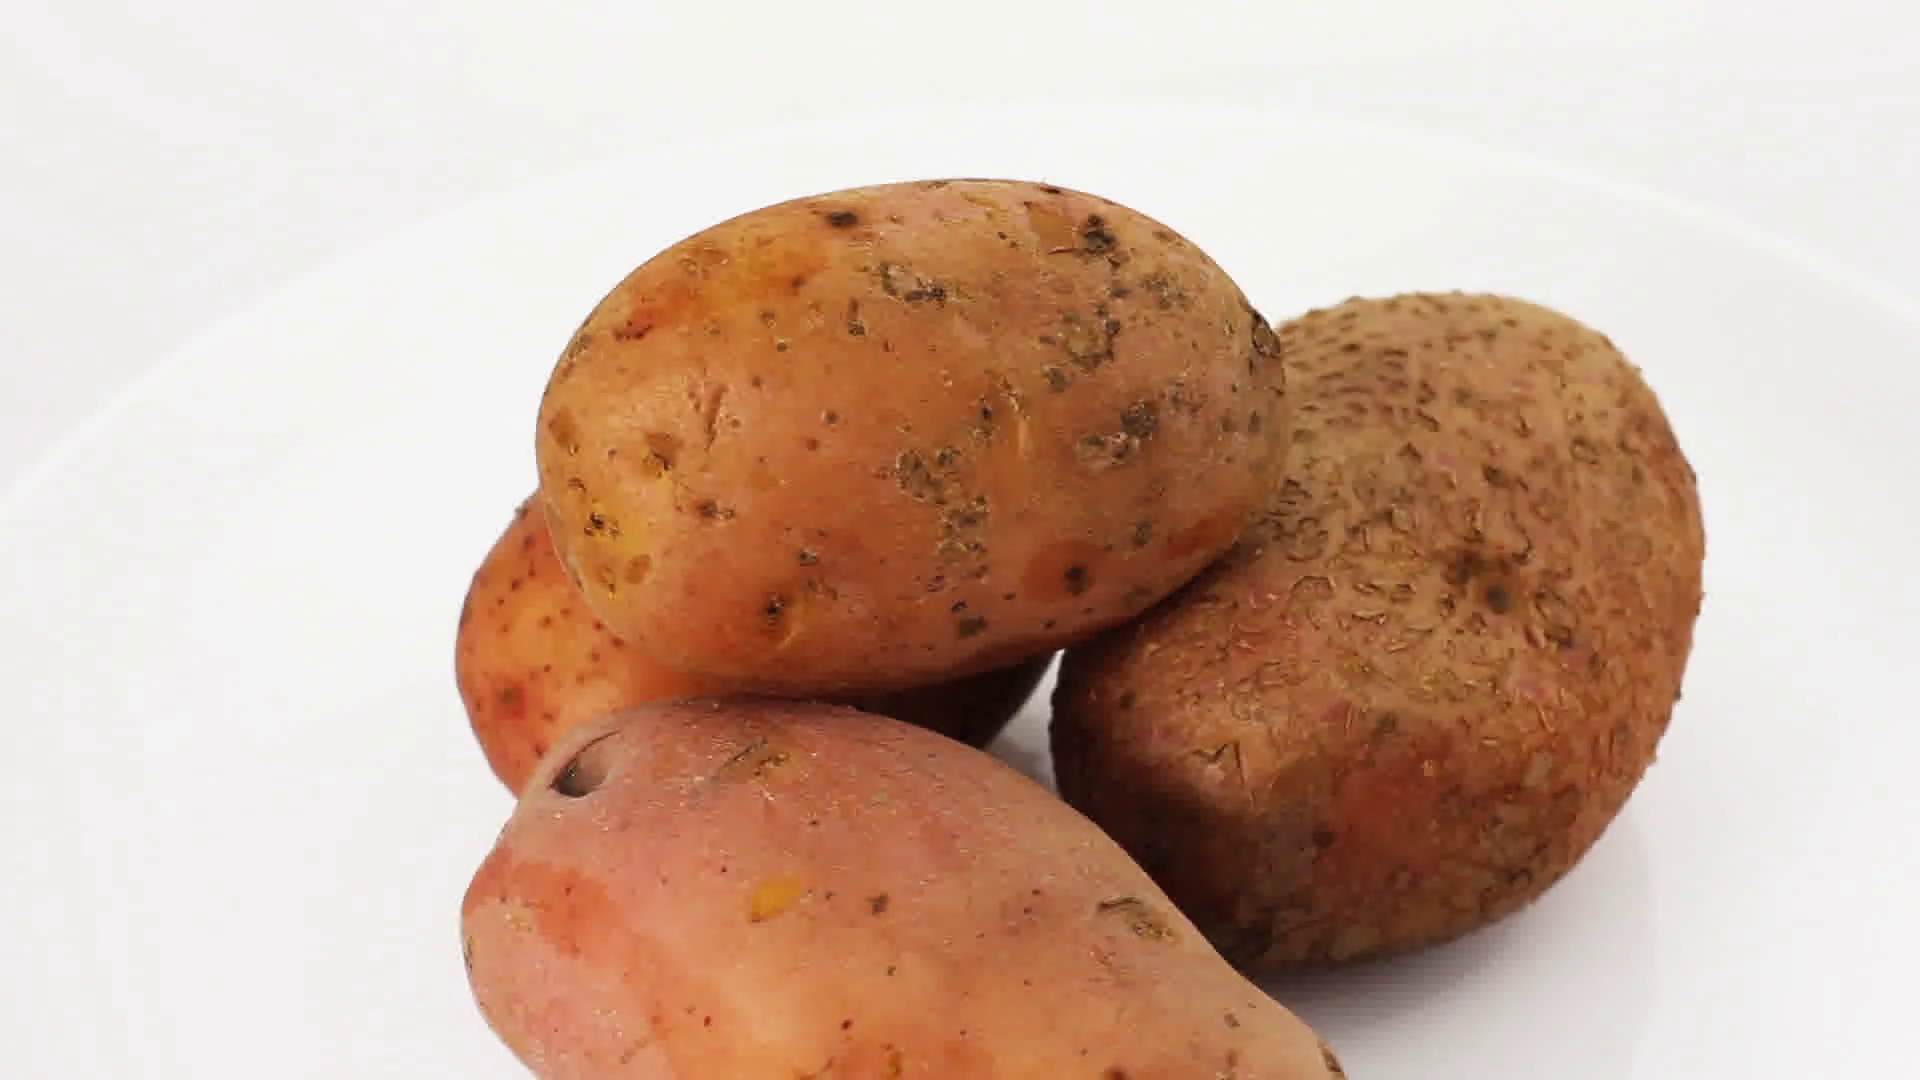 Fresh potatoes photo